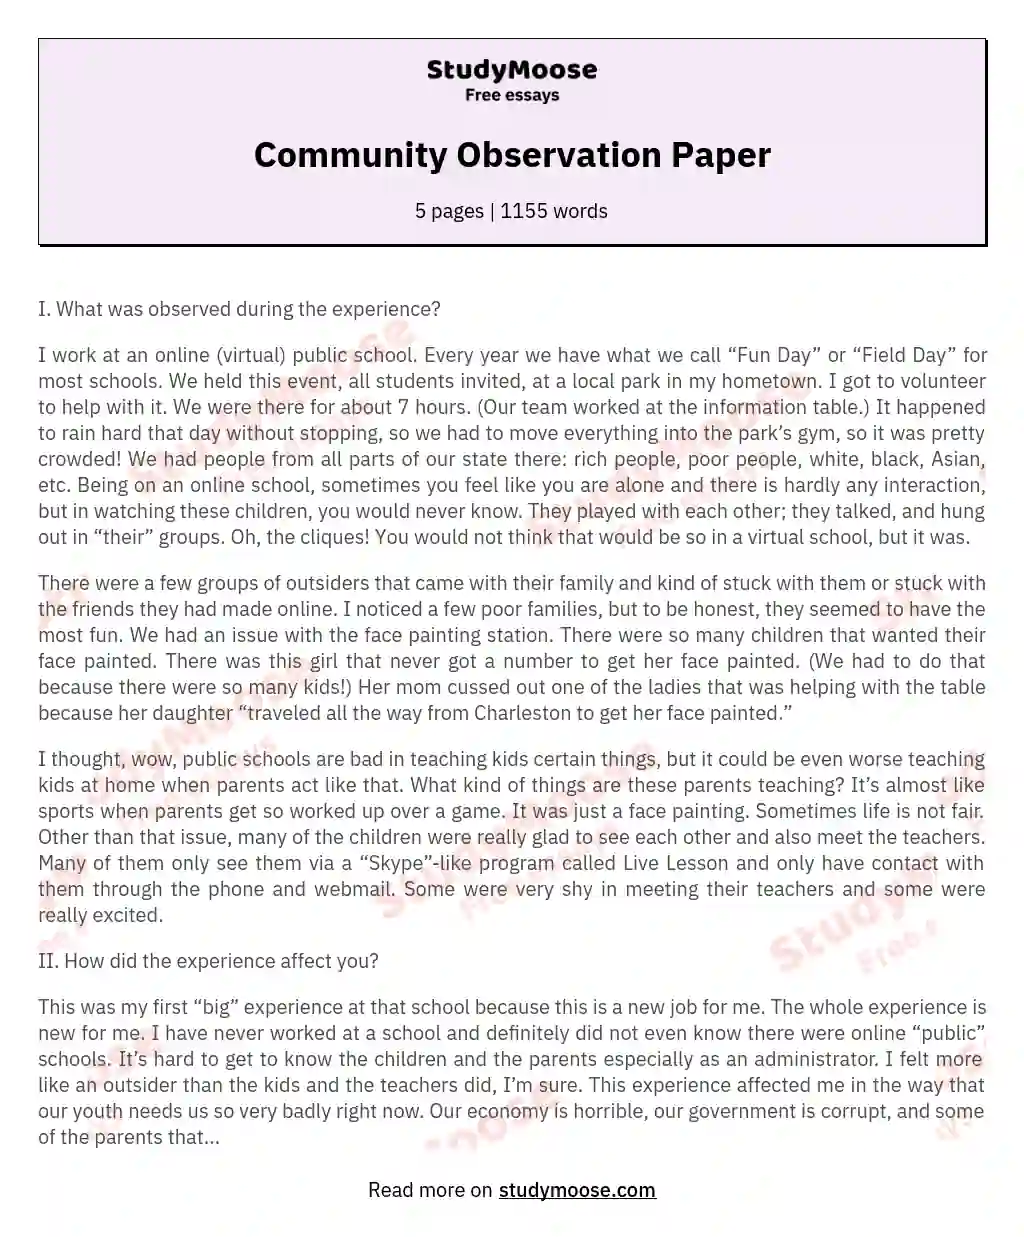 Community Observation Paper